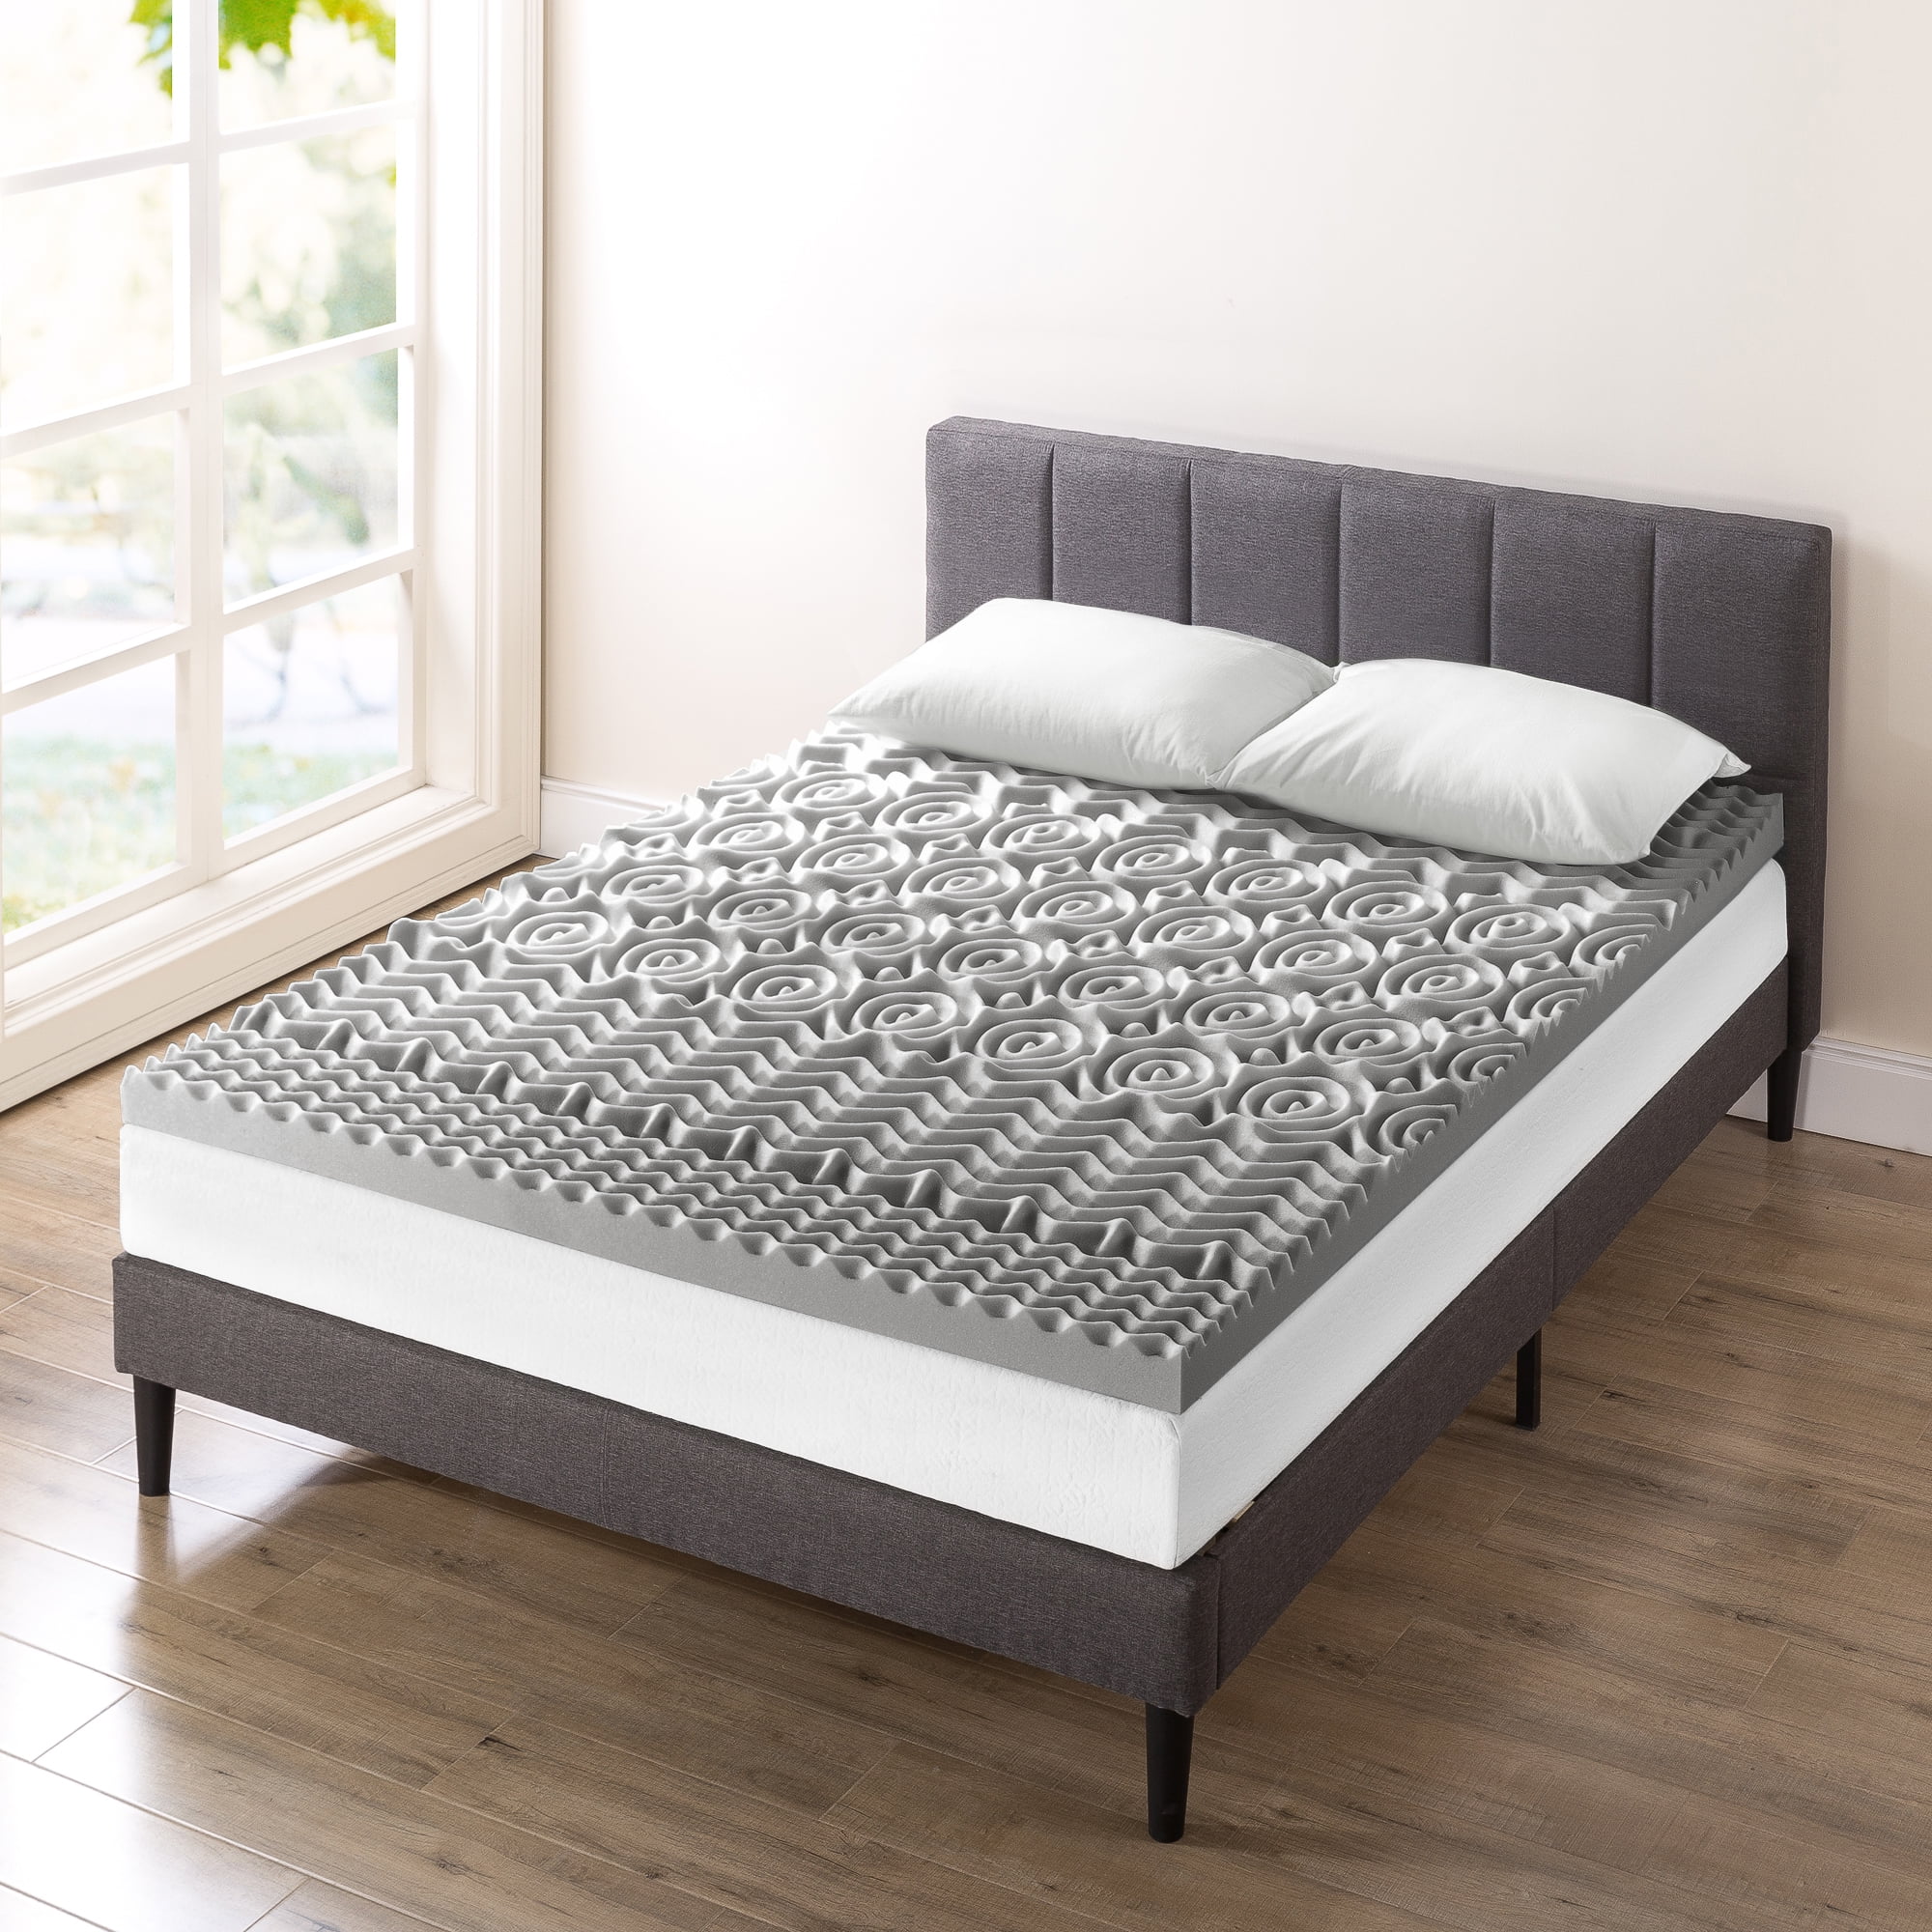 Mello Beauty Bed Memory Foam Topper - Size: 73” x 29” x 2” (186 x 74 x 5  cm)